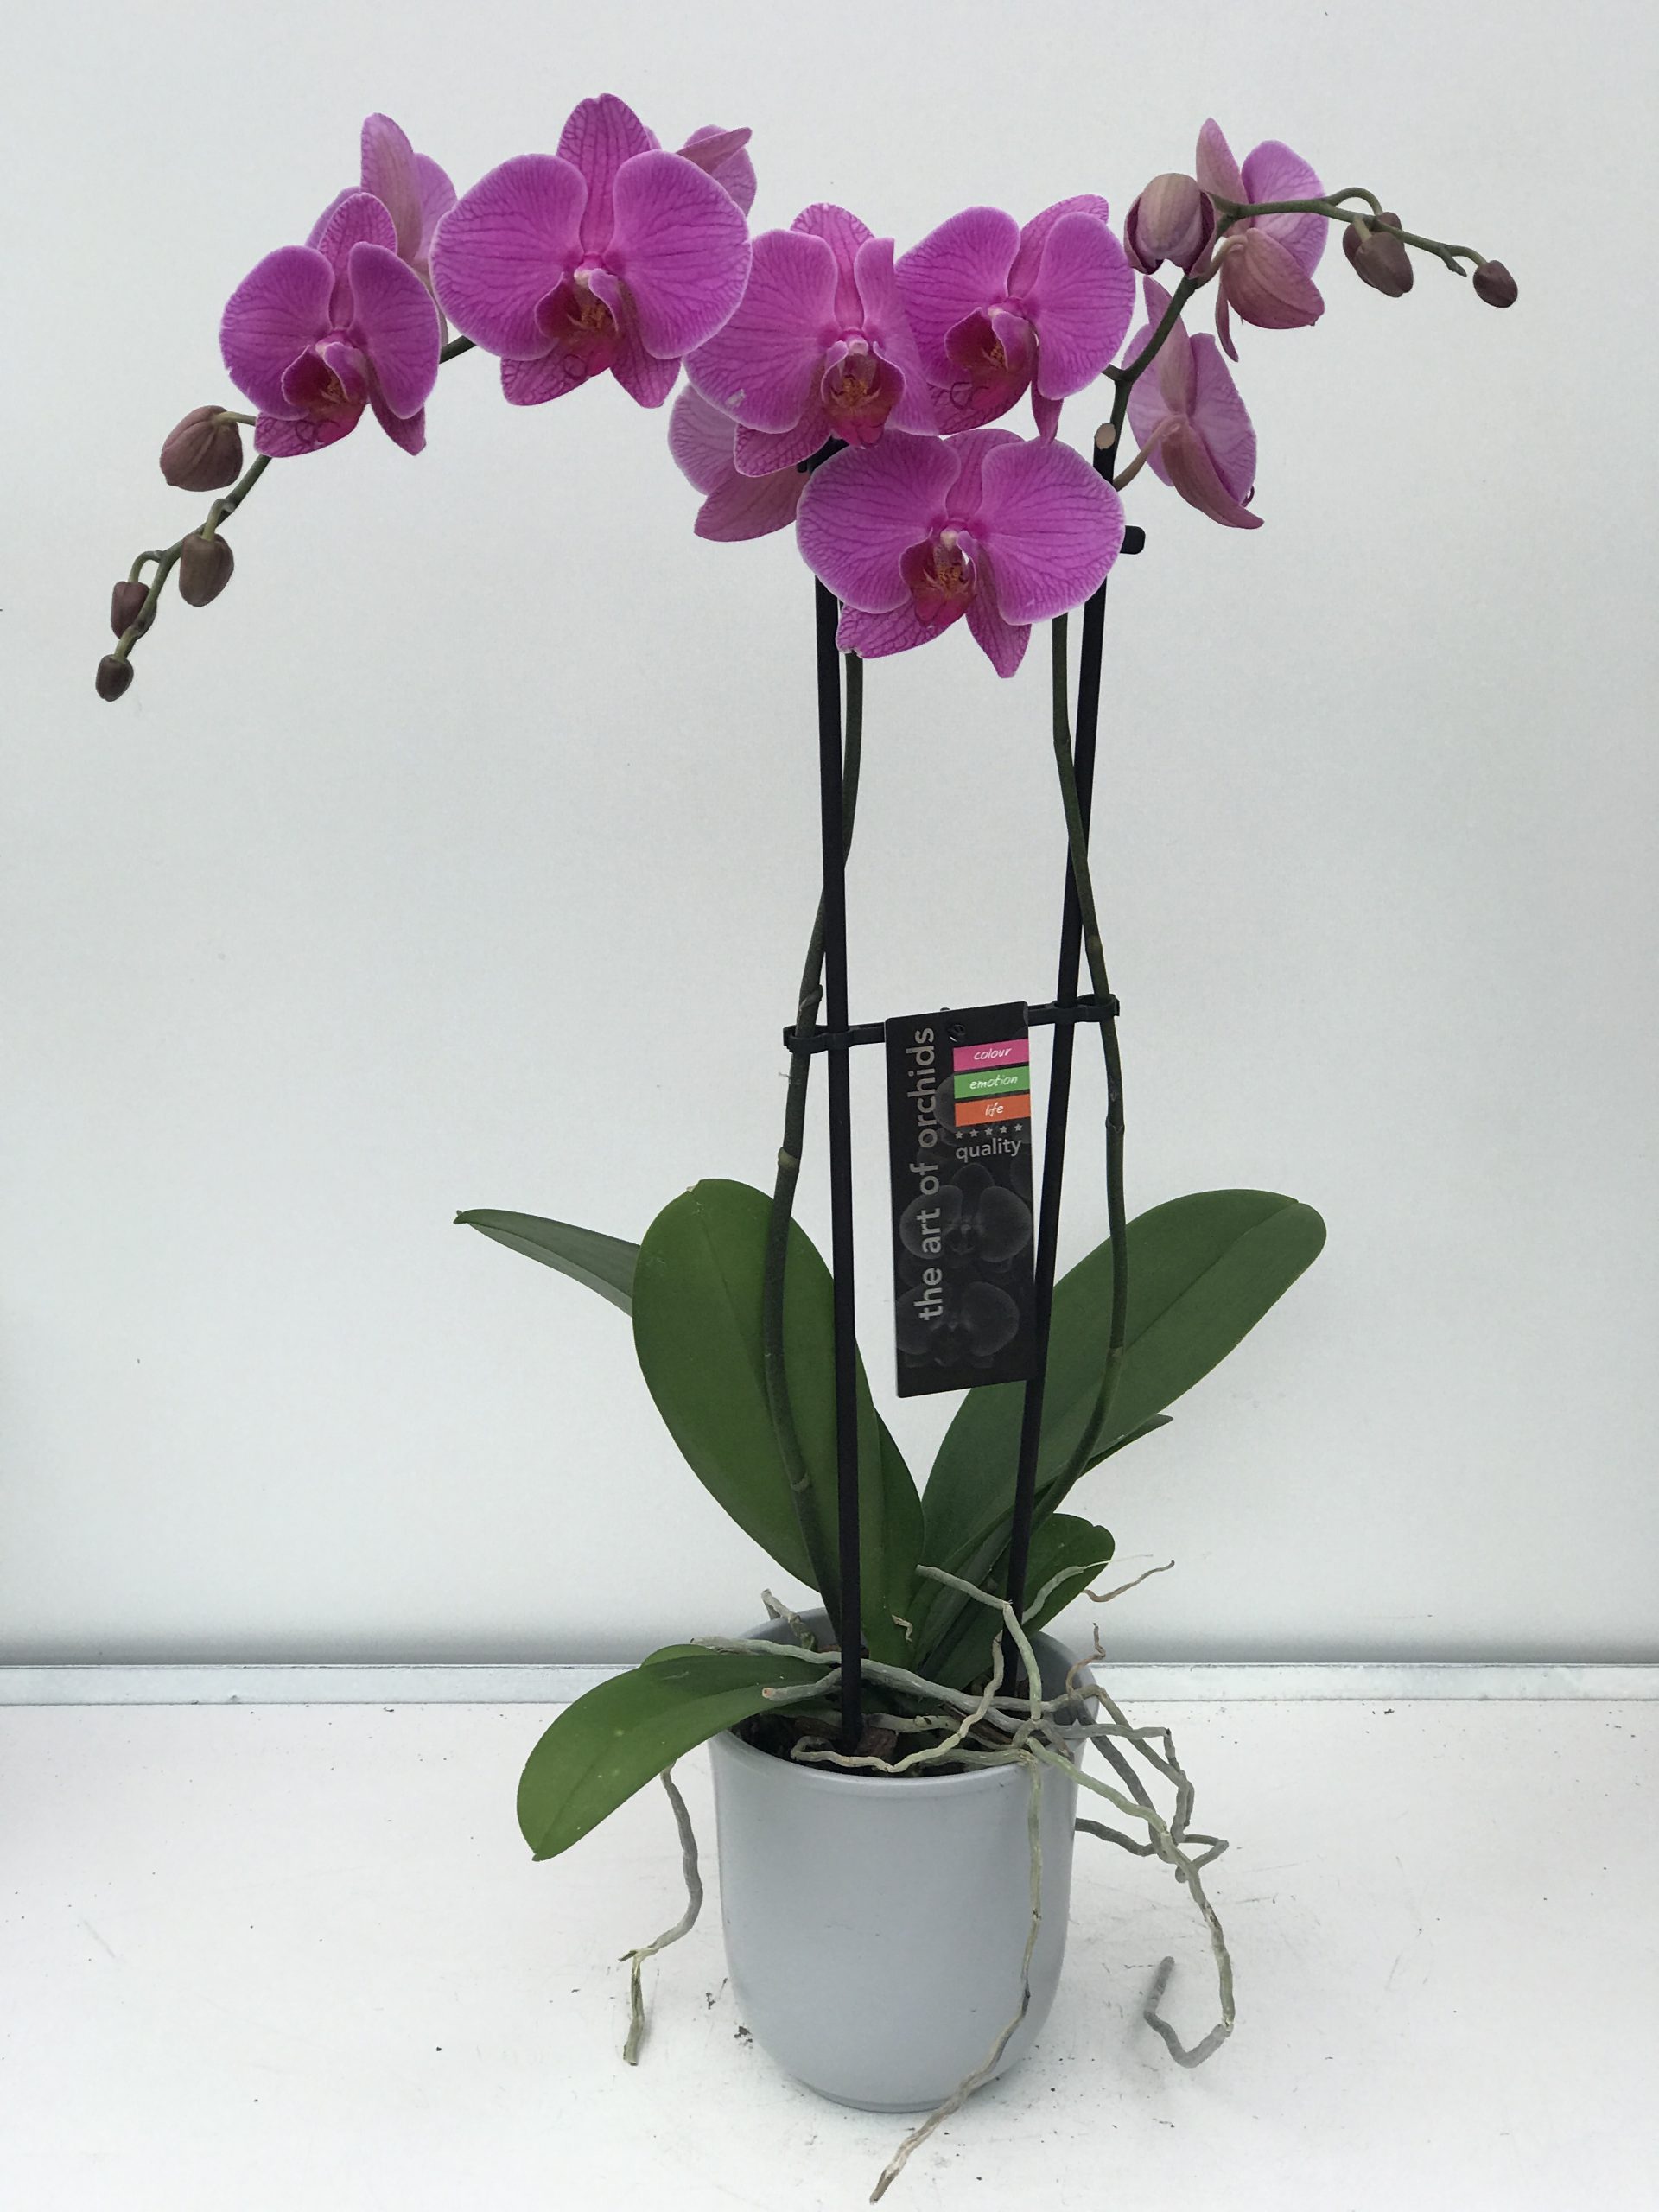 5" purple phalaenopsis orchid in ceramic container